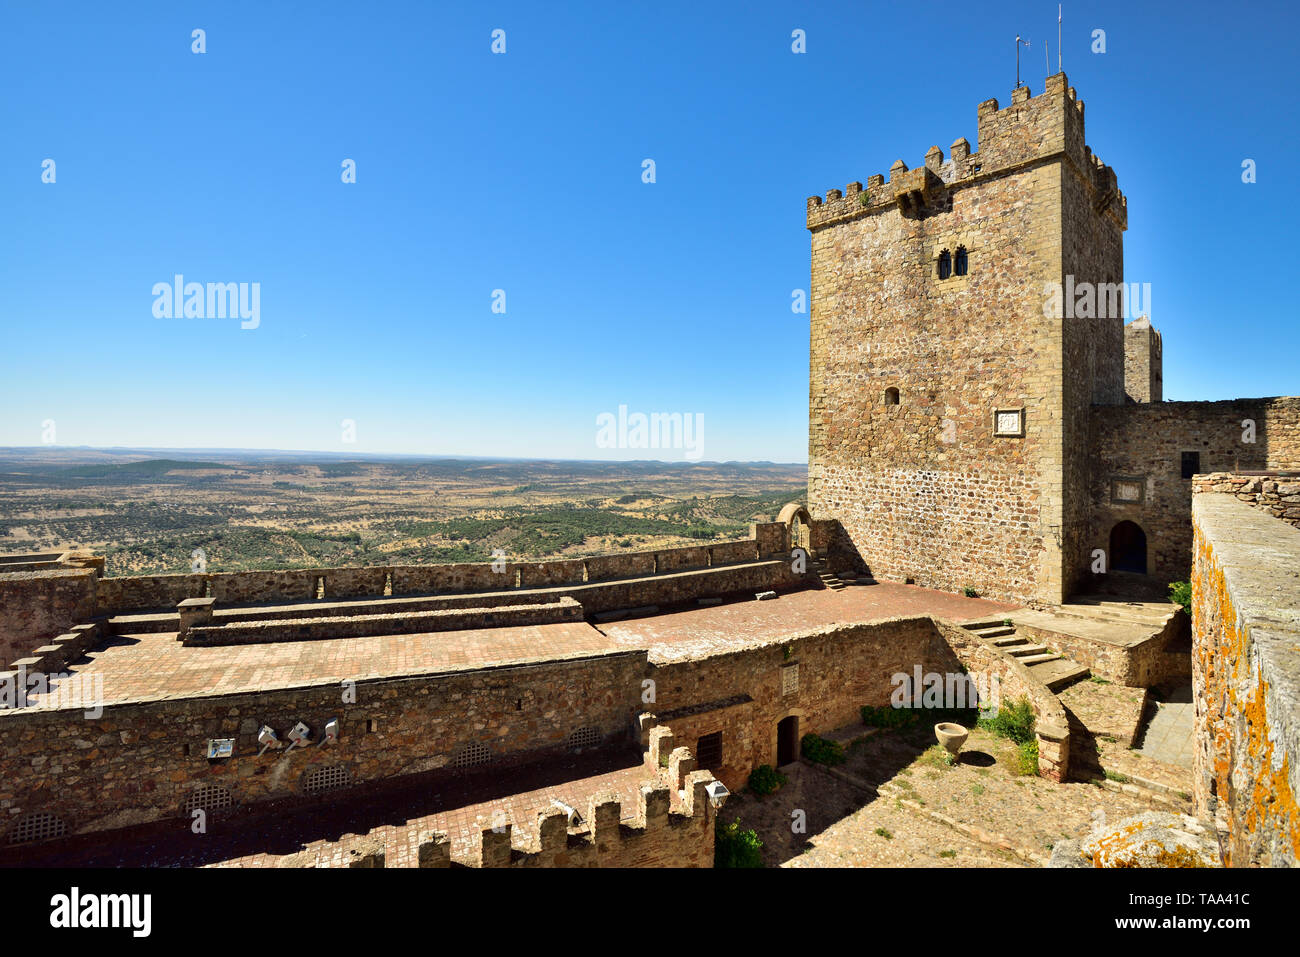 The medieval castle of Albuquerque (Luna Castle) dating back to the 13th century. Albuquerque, Spain Stock Photo